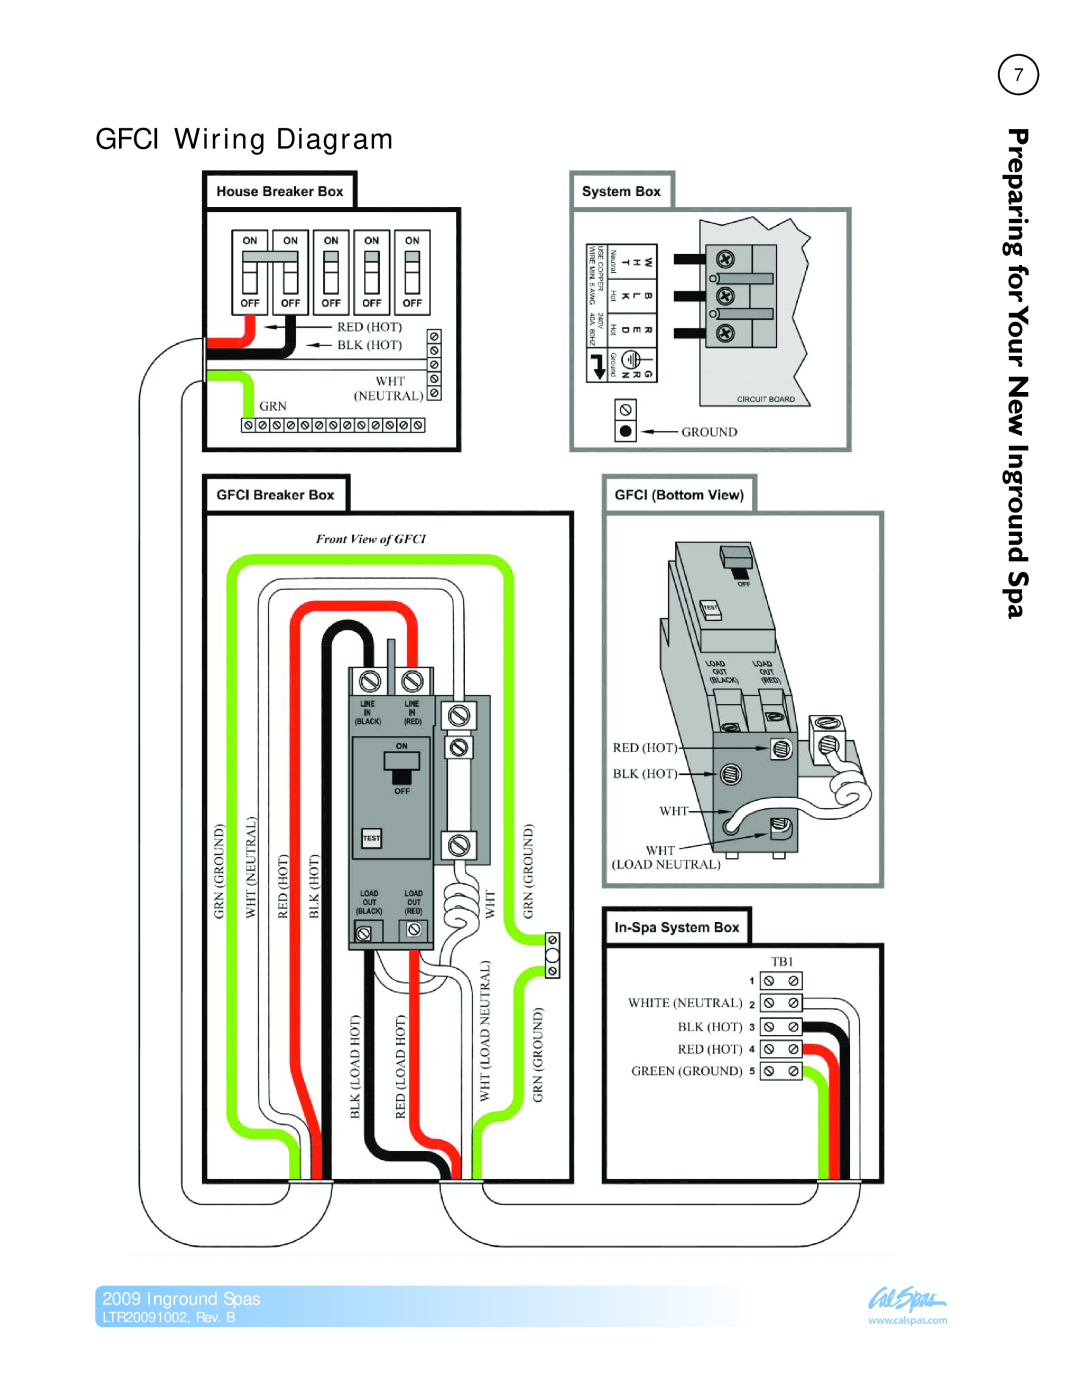 Cal Spas manual GFCI Wiring Diagram, Your New Inground Spa, Inground Spas, LTR20091002, Rev. B, Preparingfor 